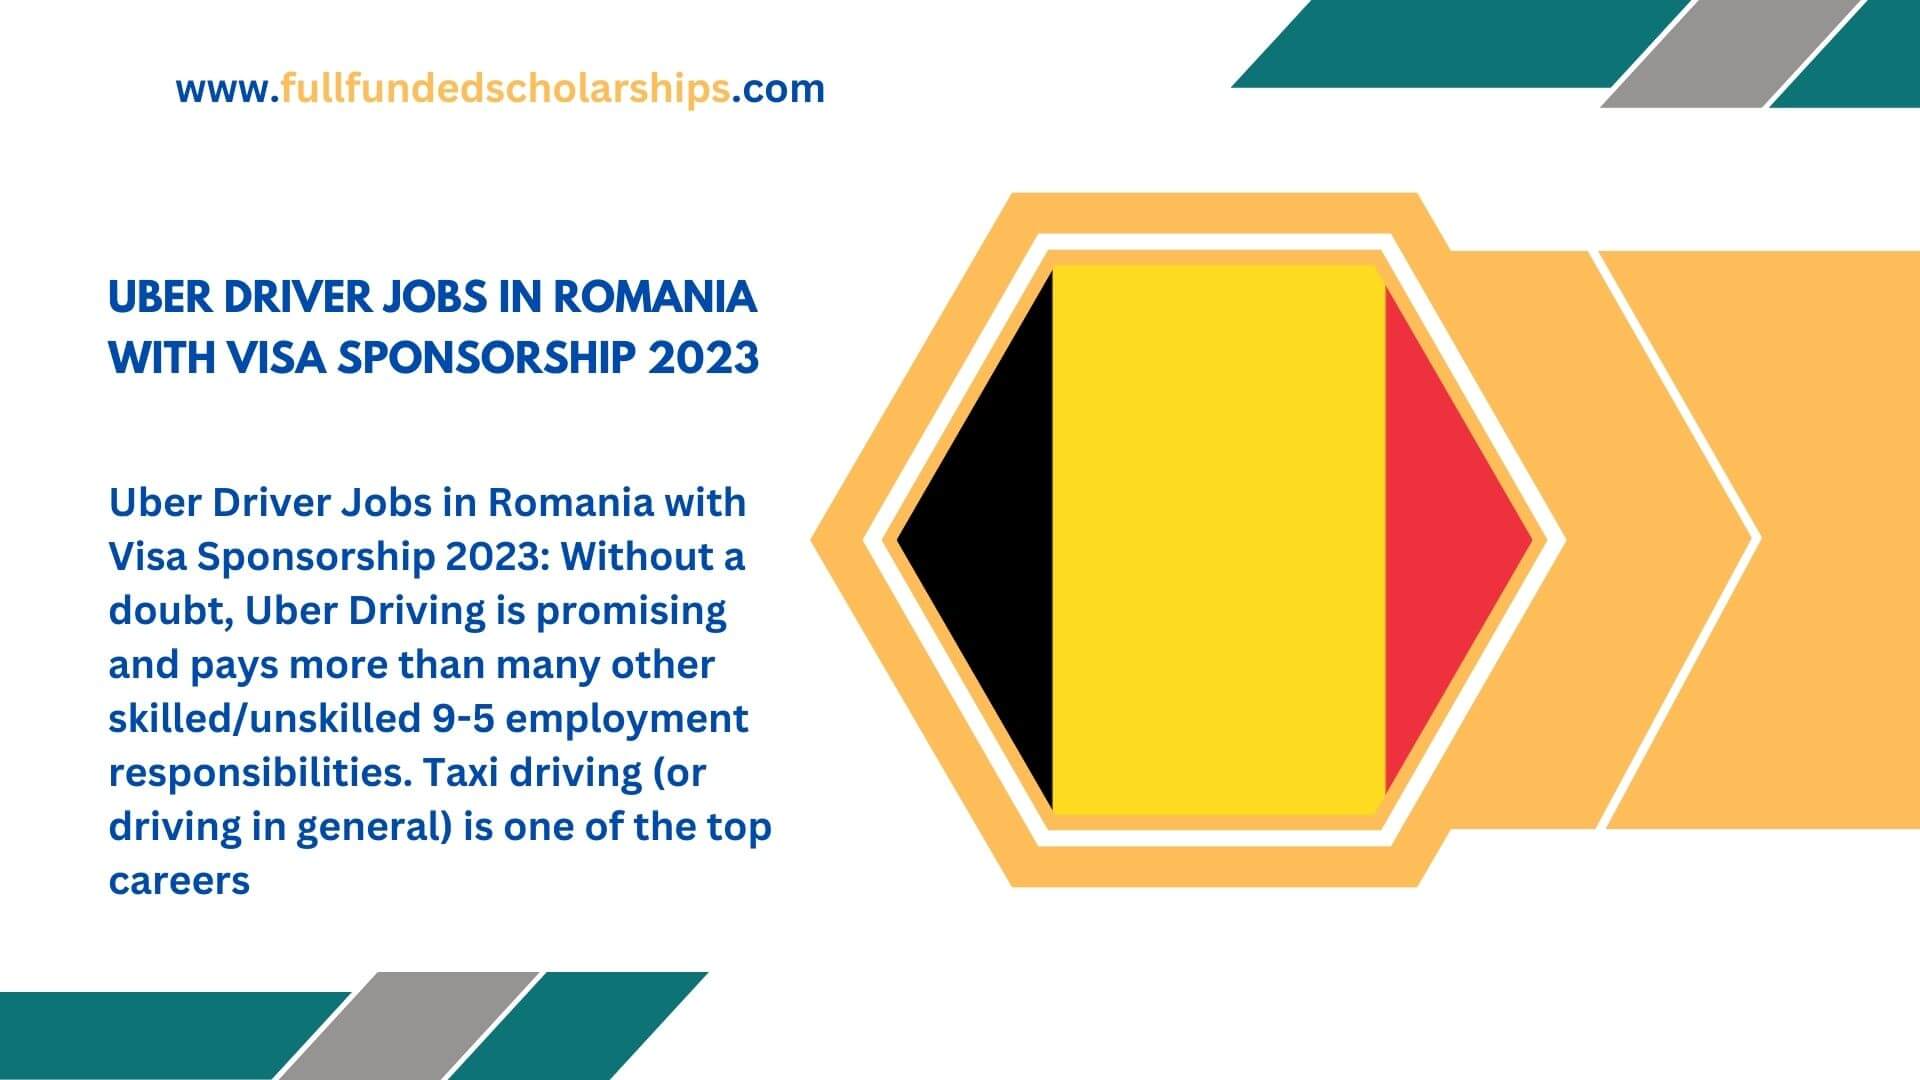 Uber Driver Jobs in Romania with Visa Sponsorship 2023